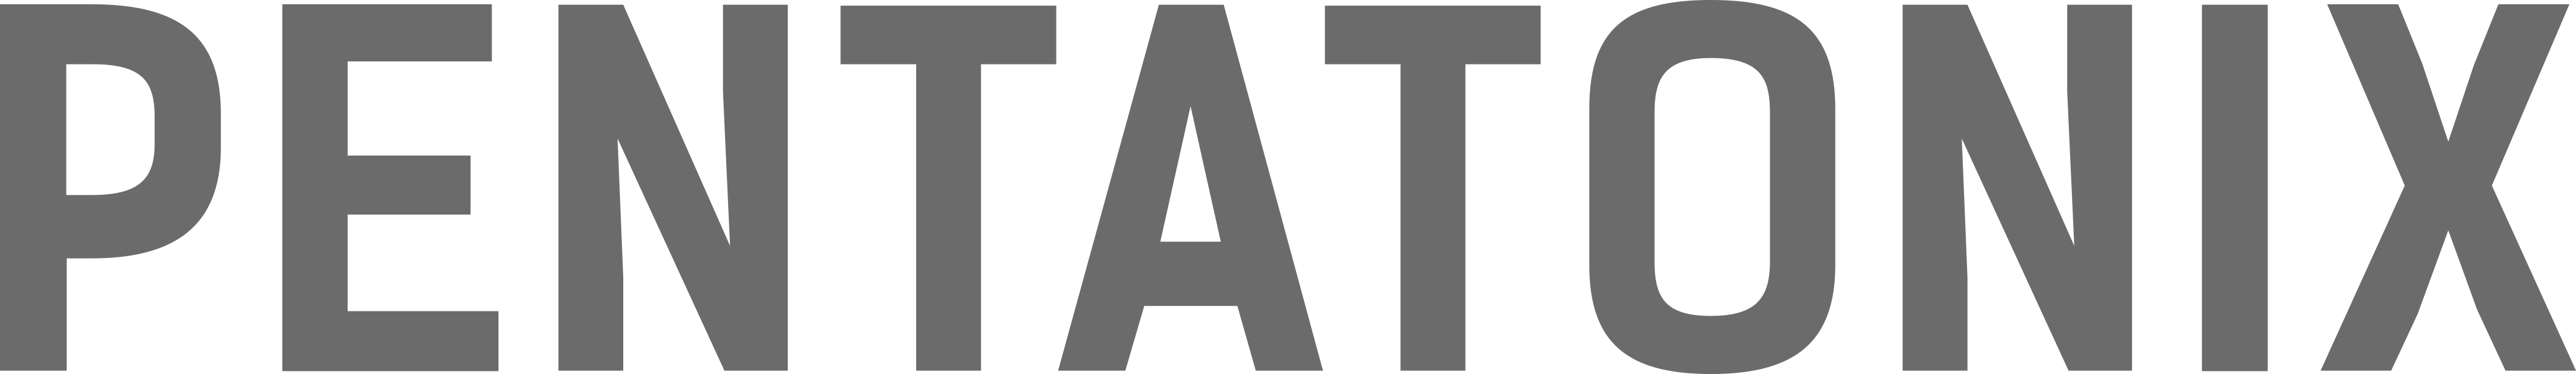 Pentatonix Logo - Pentatonix Official Website